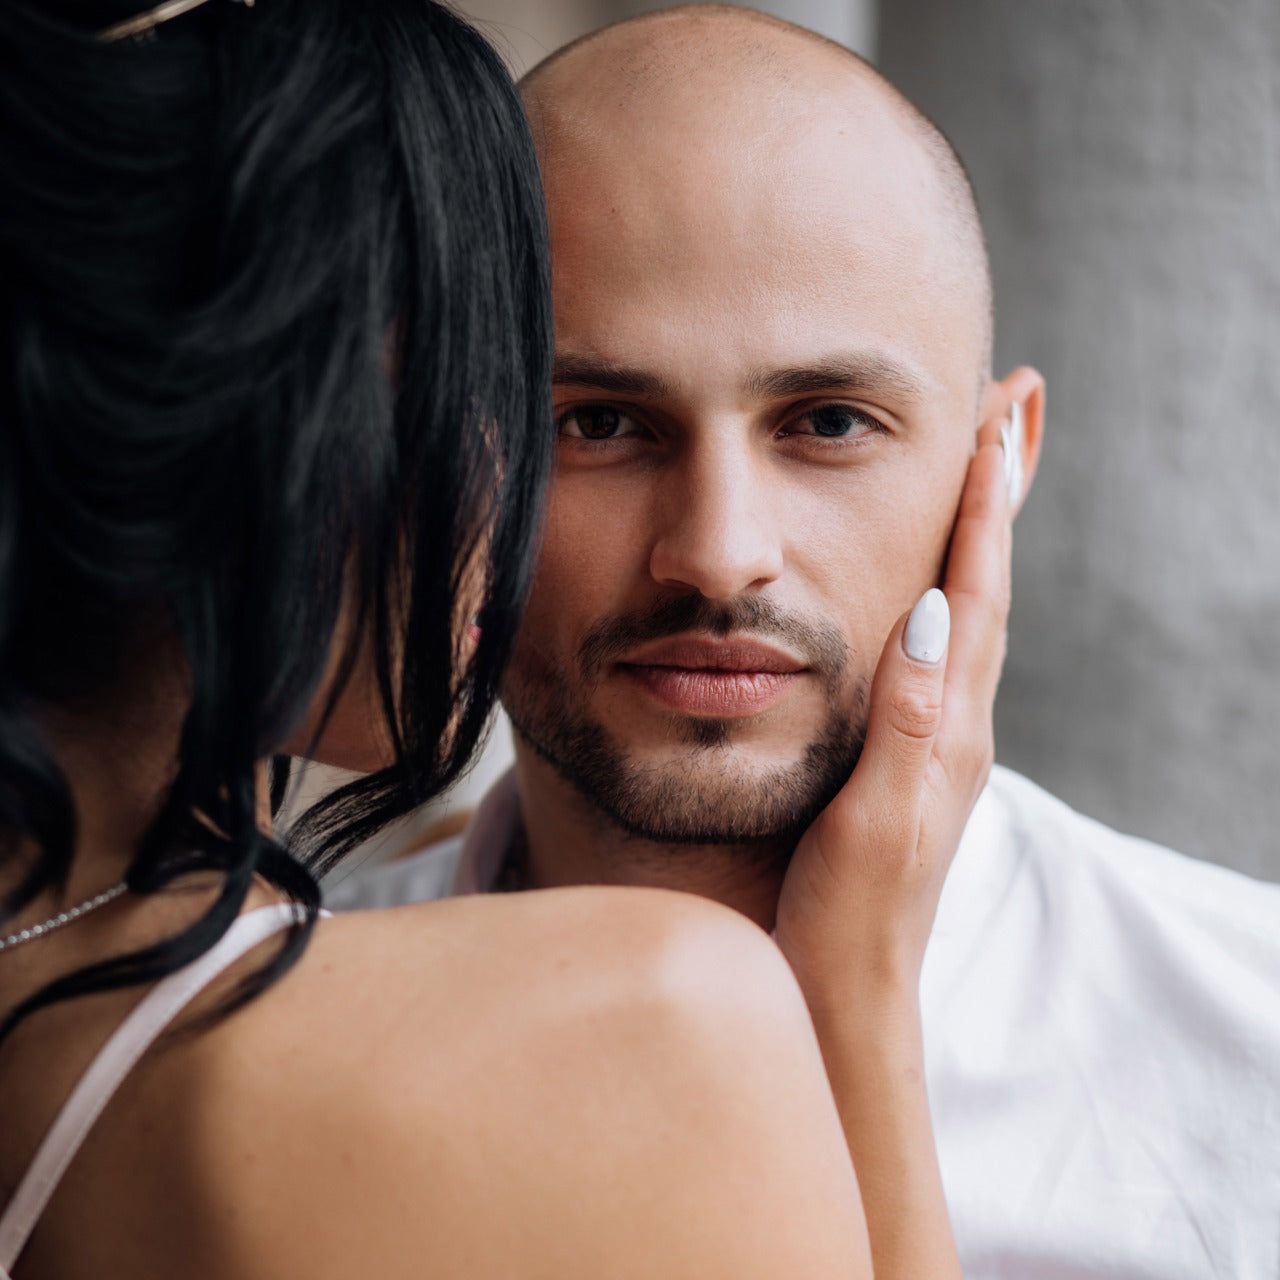 a woman dating a bald man